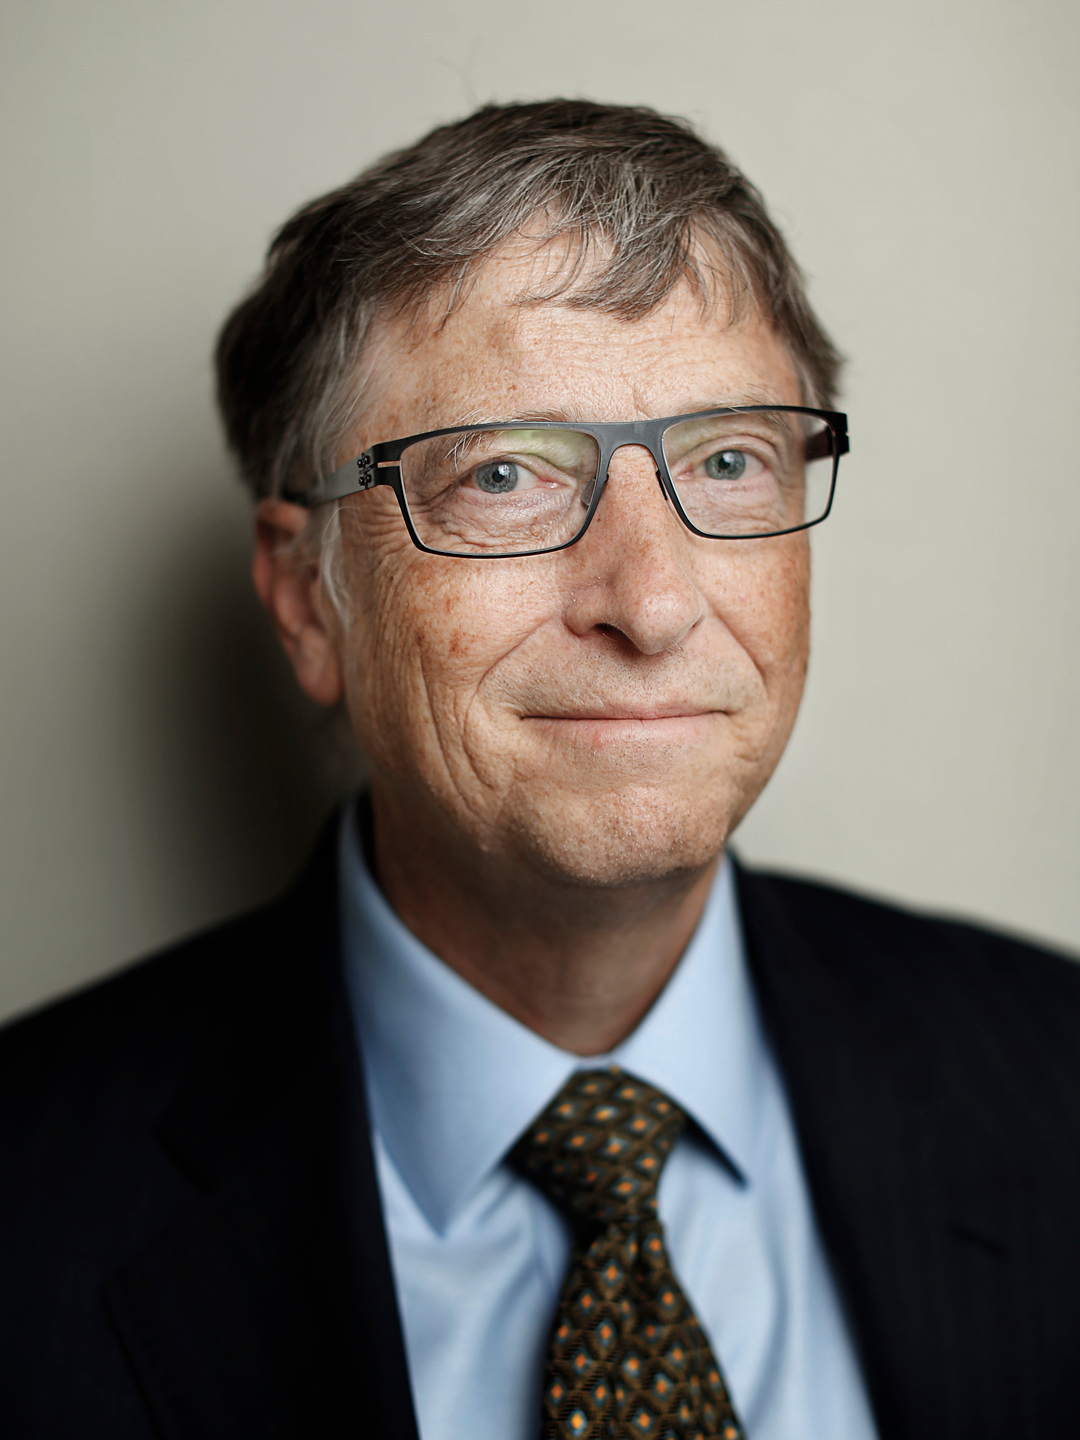 Bill Gates personal traits